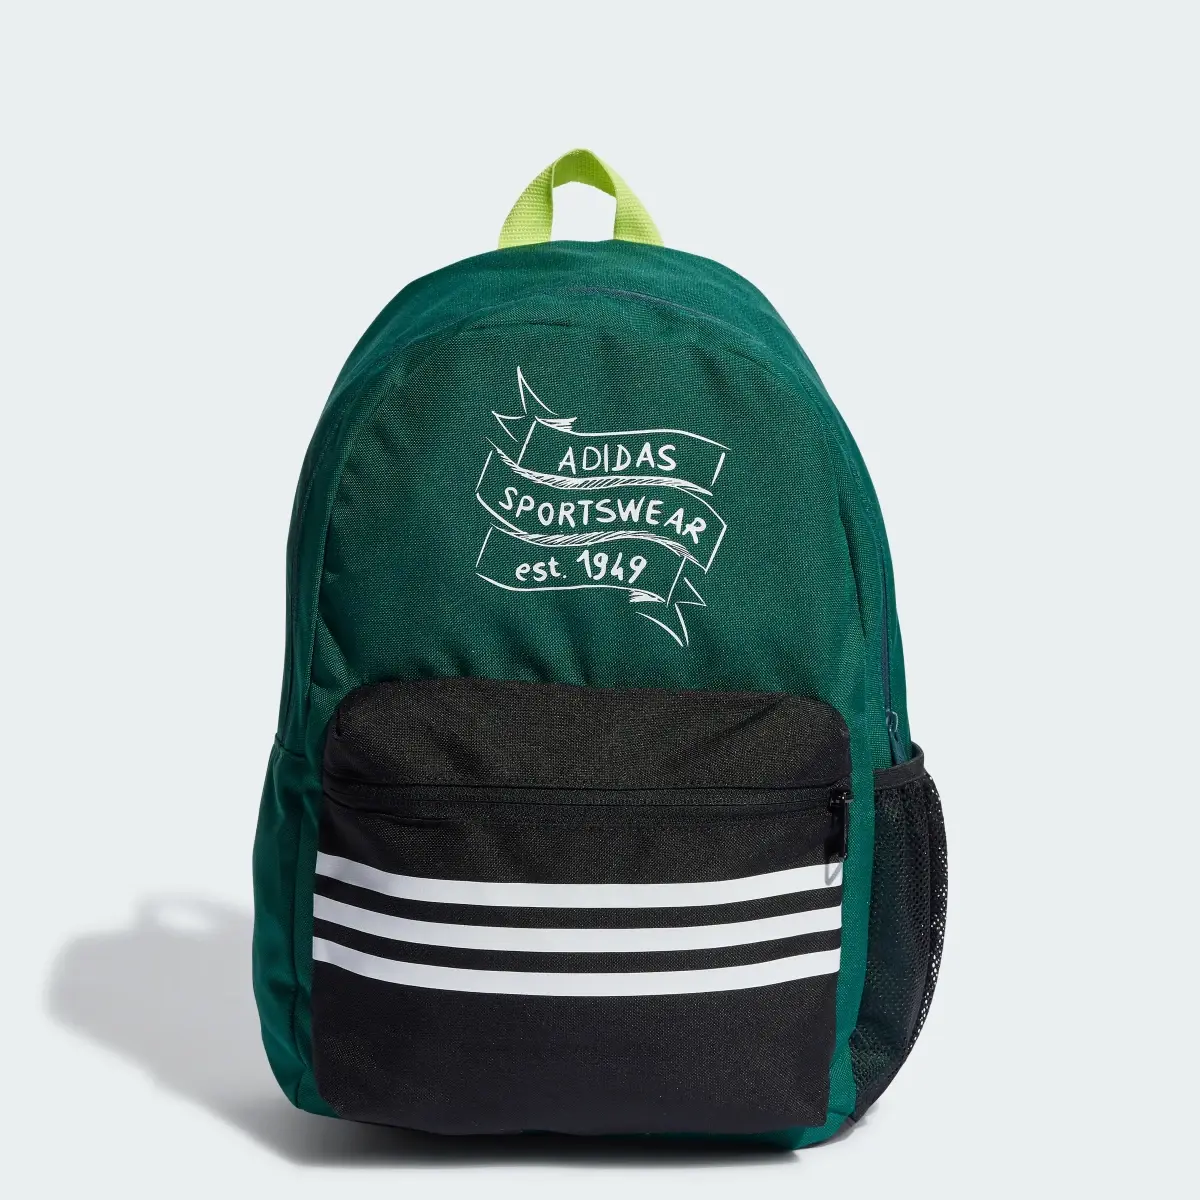 Adidas Brand Love Backpack. 1